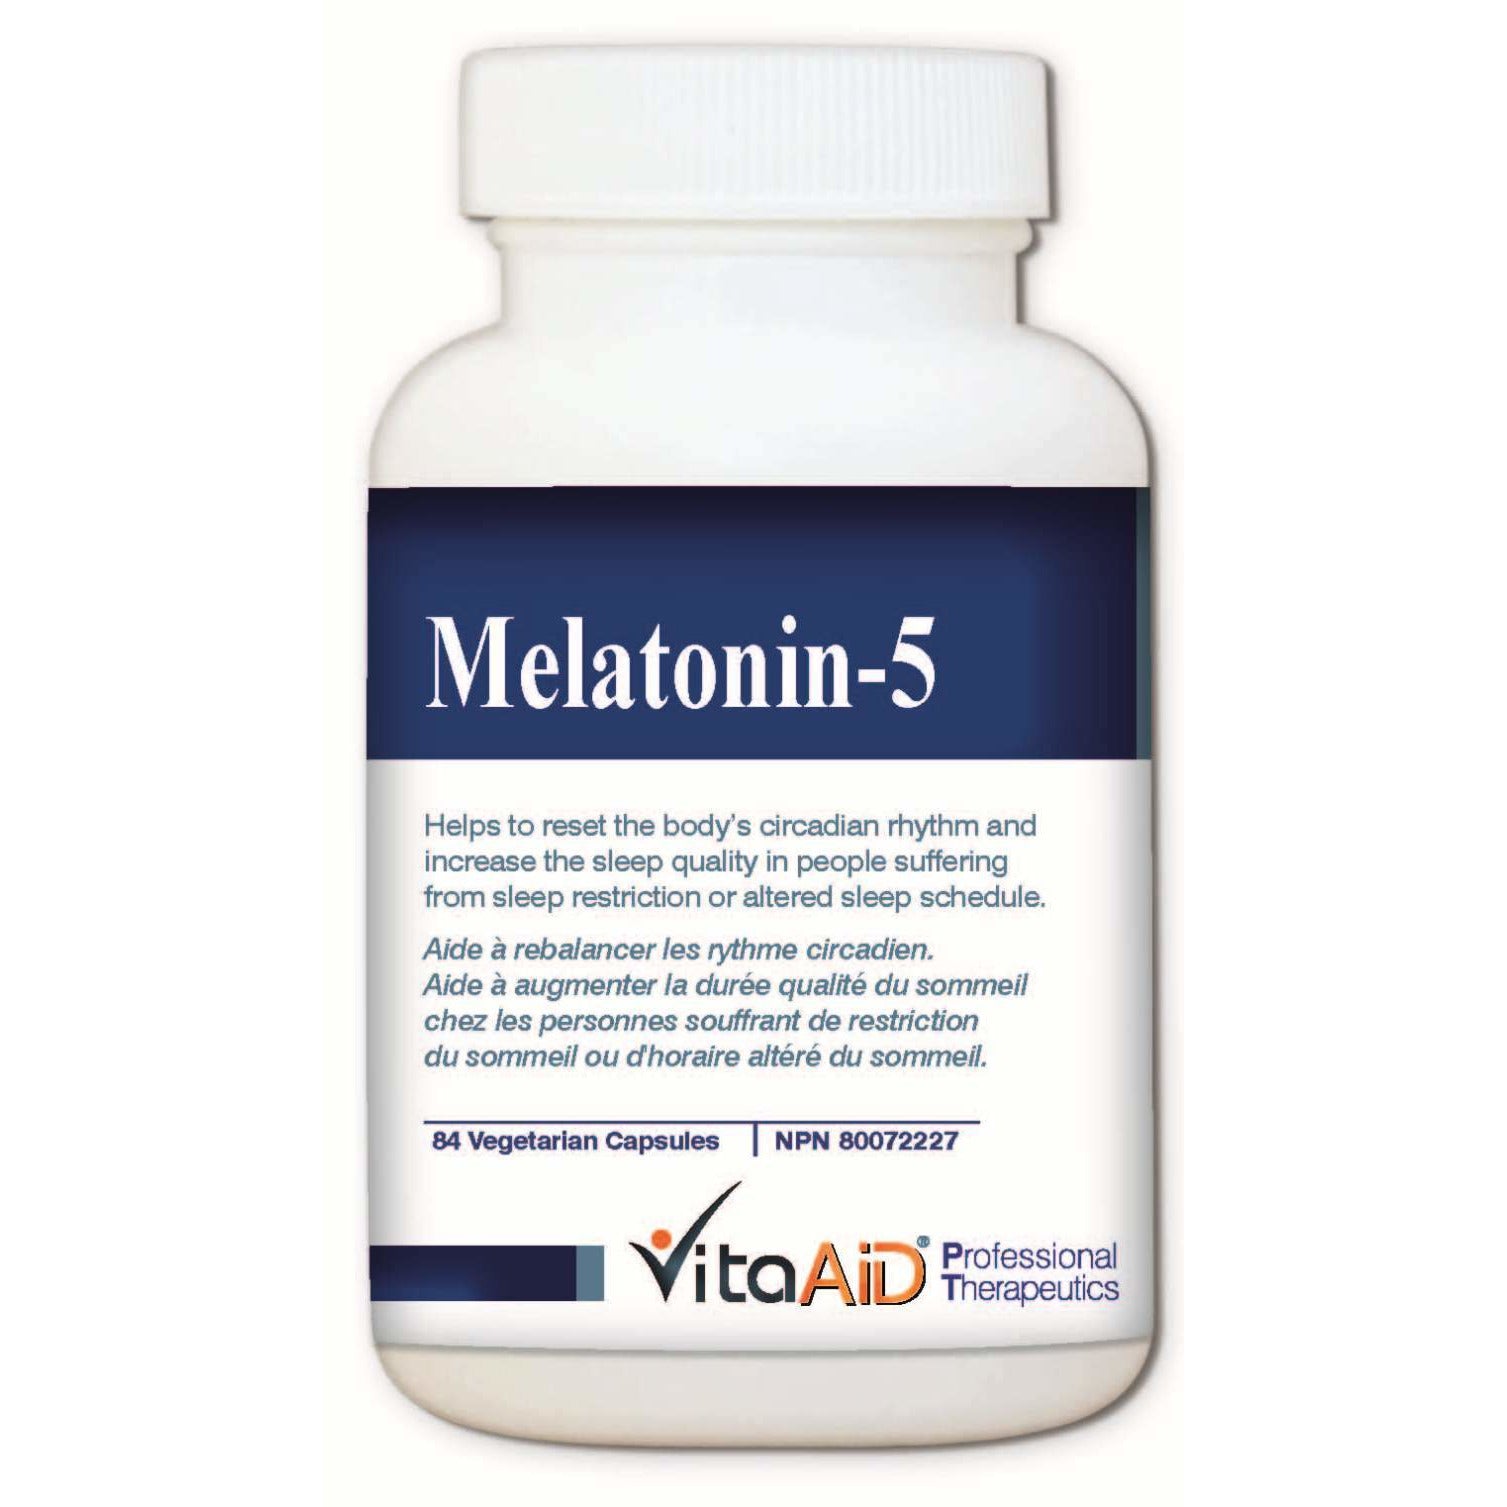 Melatonin-5 Restores Body's Circadian Rhythm 84 veg caps